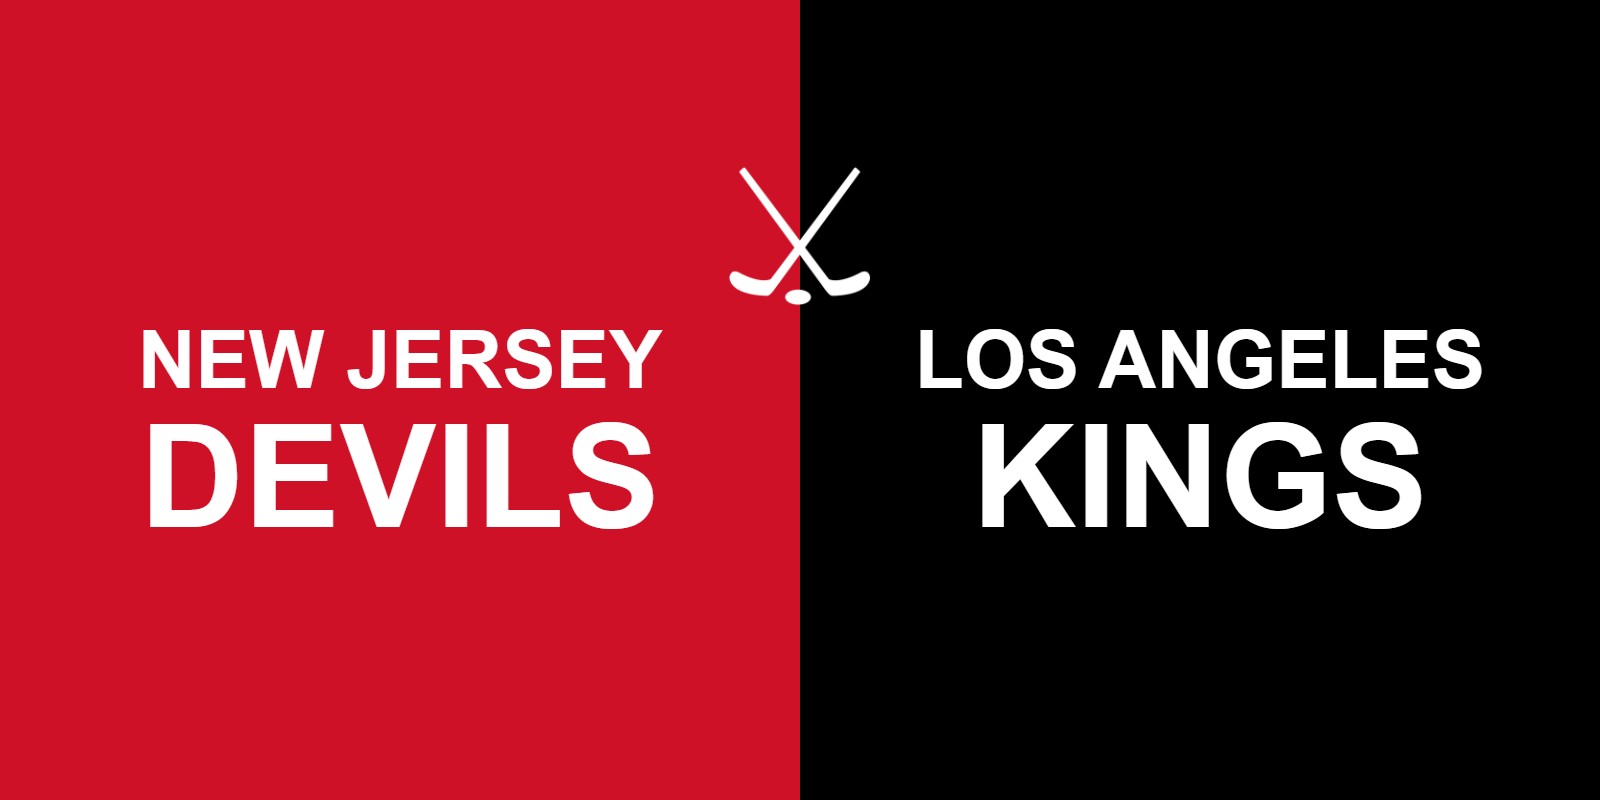 LA Kings vs New Jersey Devils tickets in Los Angeles at Crypto.com